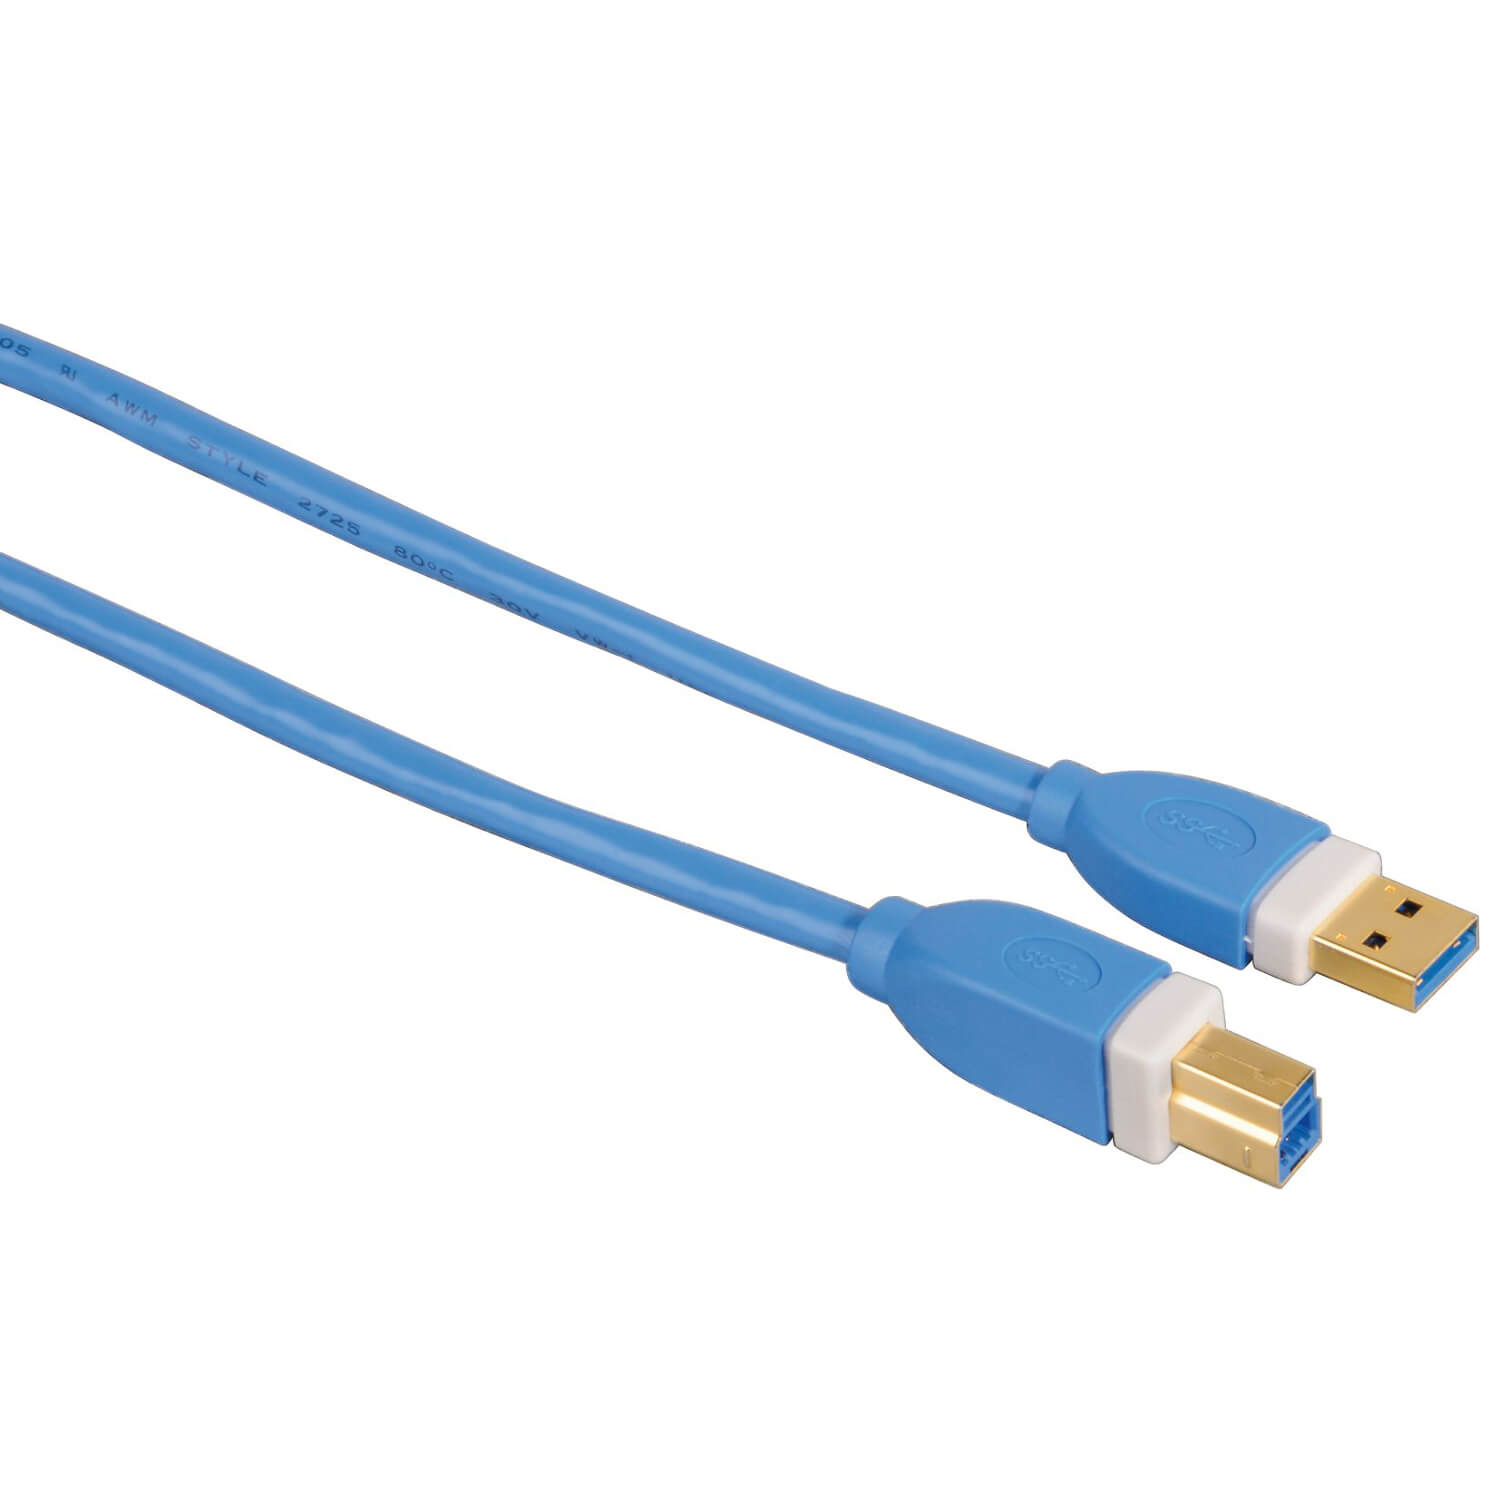  Cablu USB 3.0 Hama 39671 Tip A-B, 1.8 m 